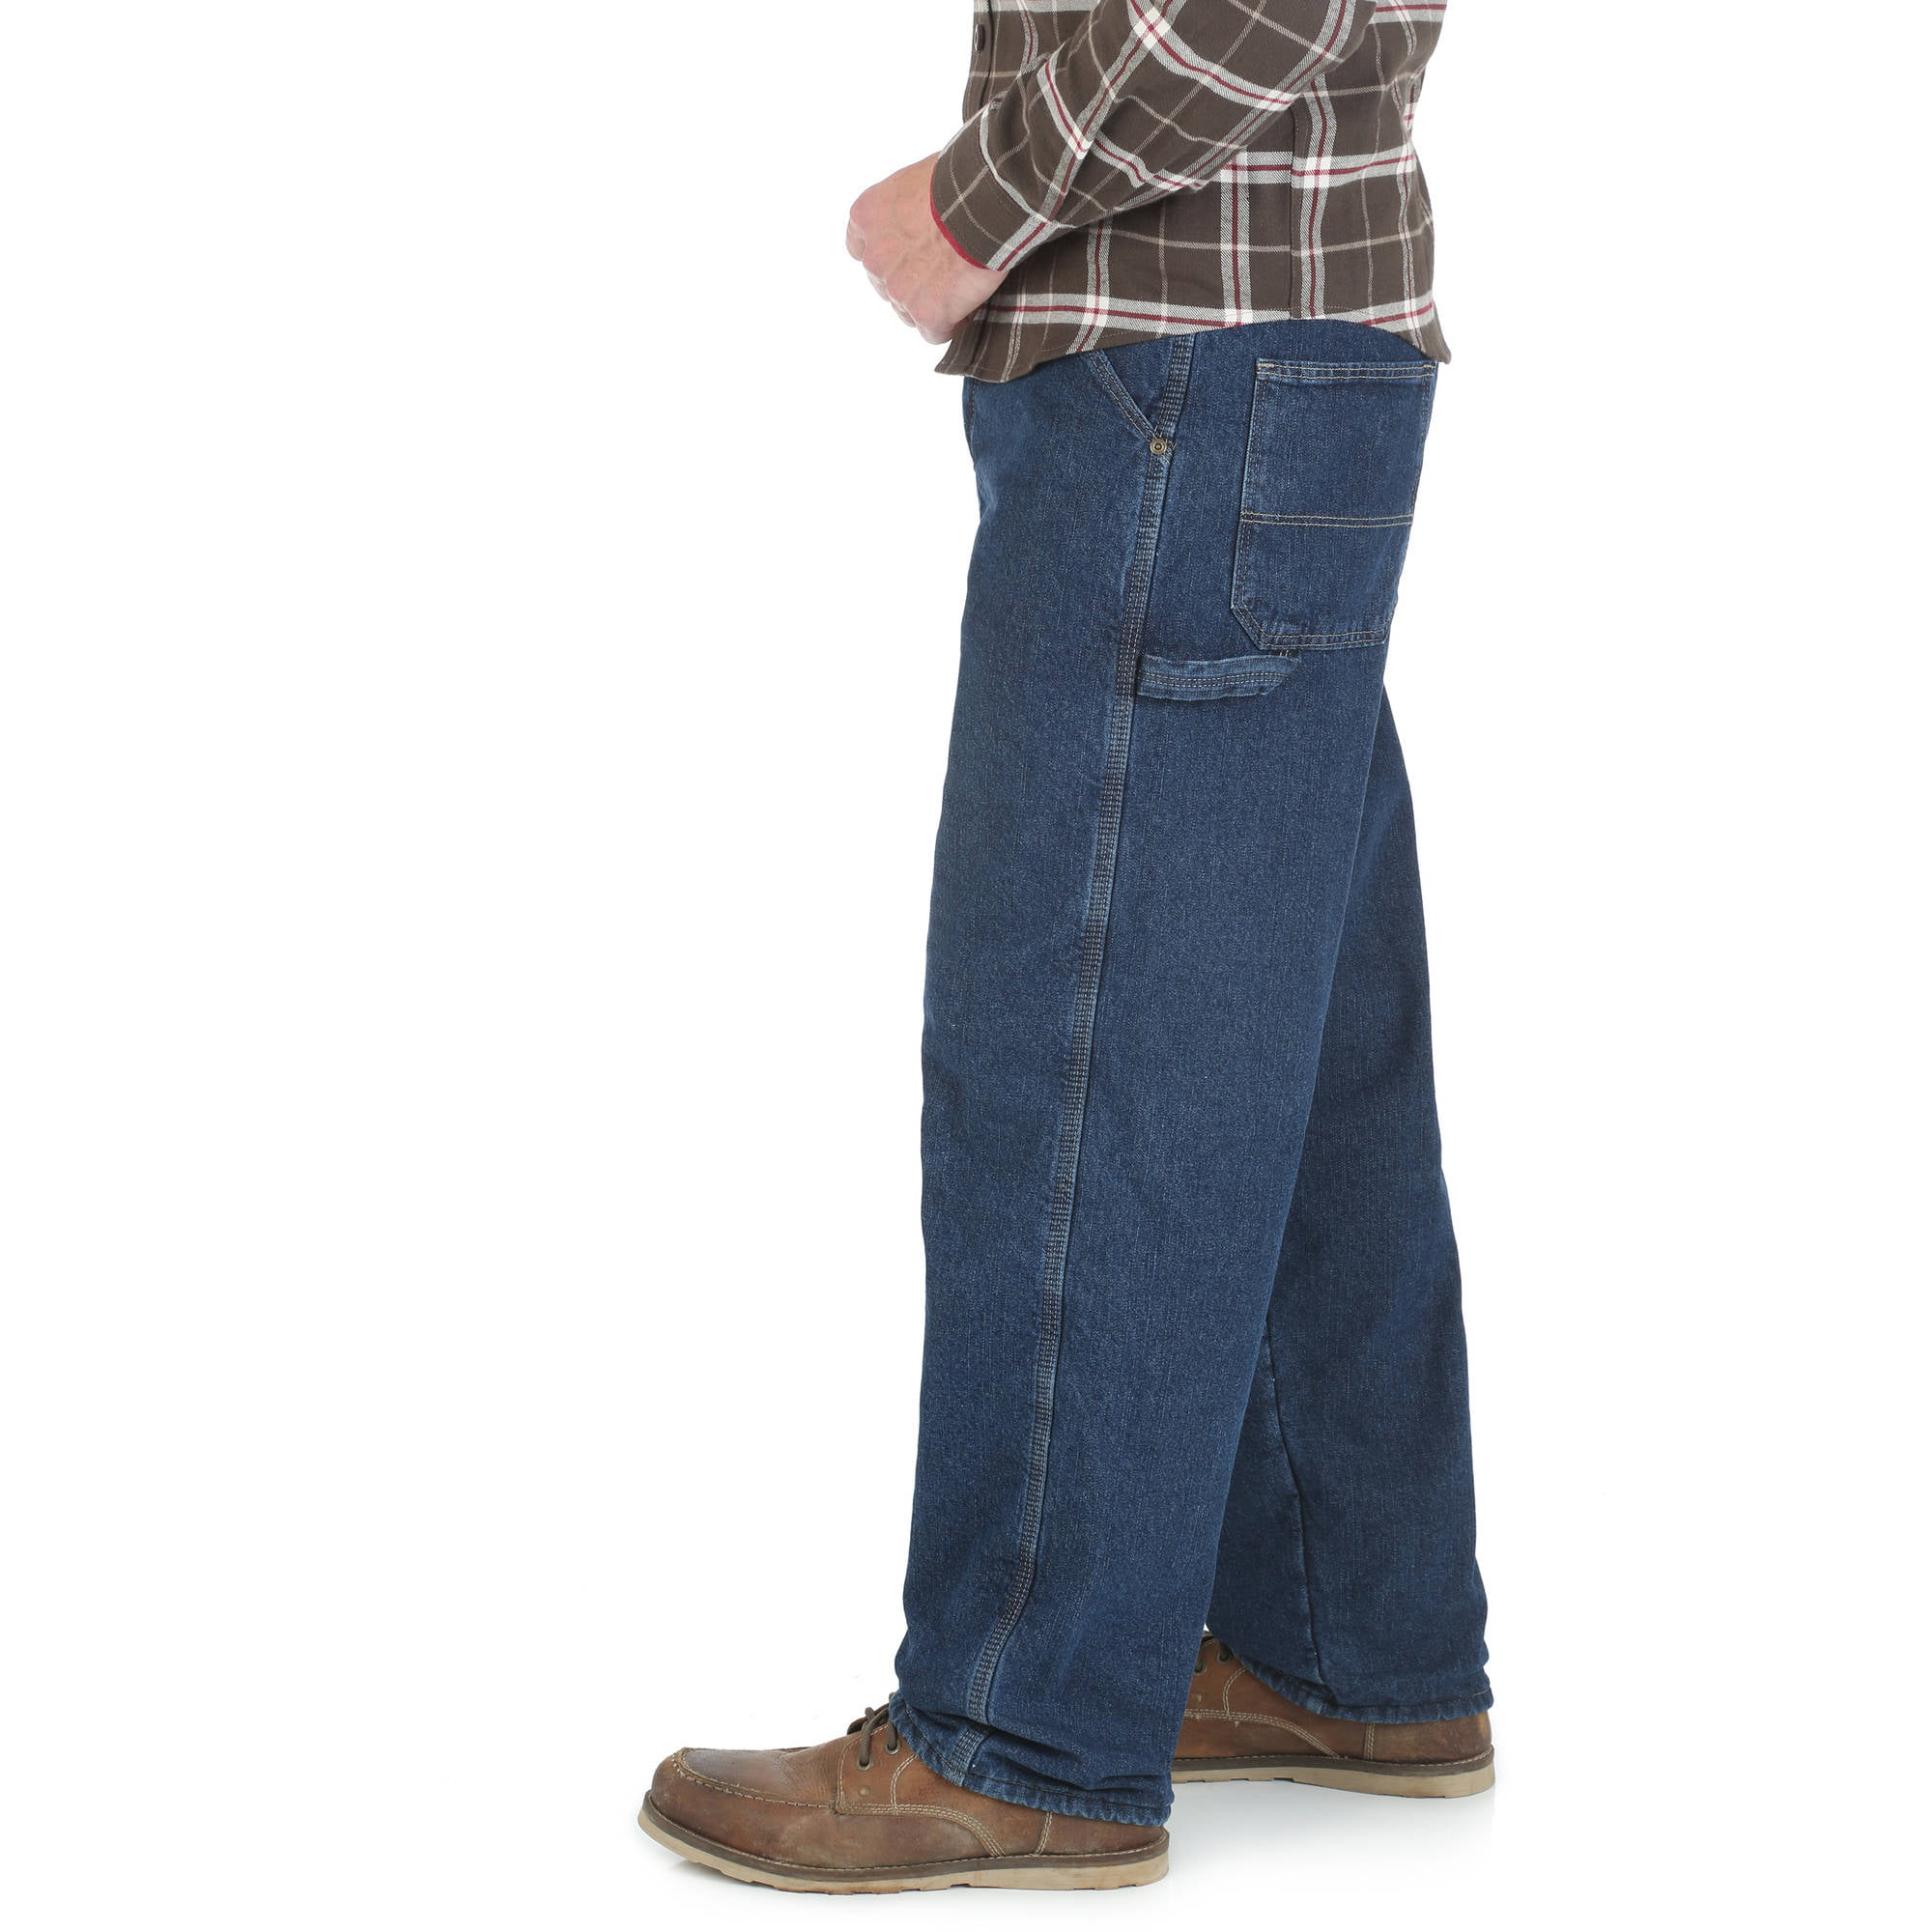 men's insulated carpenter jeans